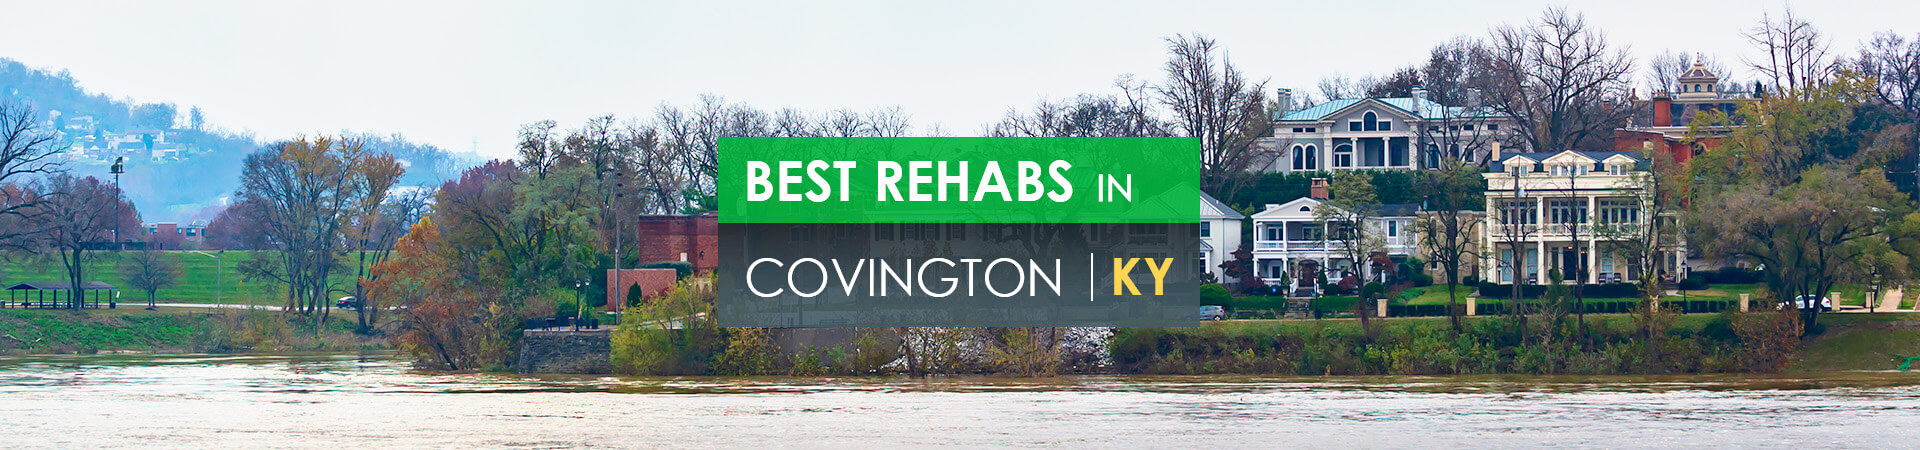 Best rehabs in Covington, KY